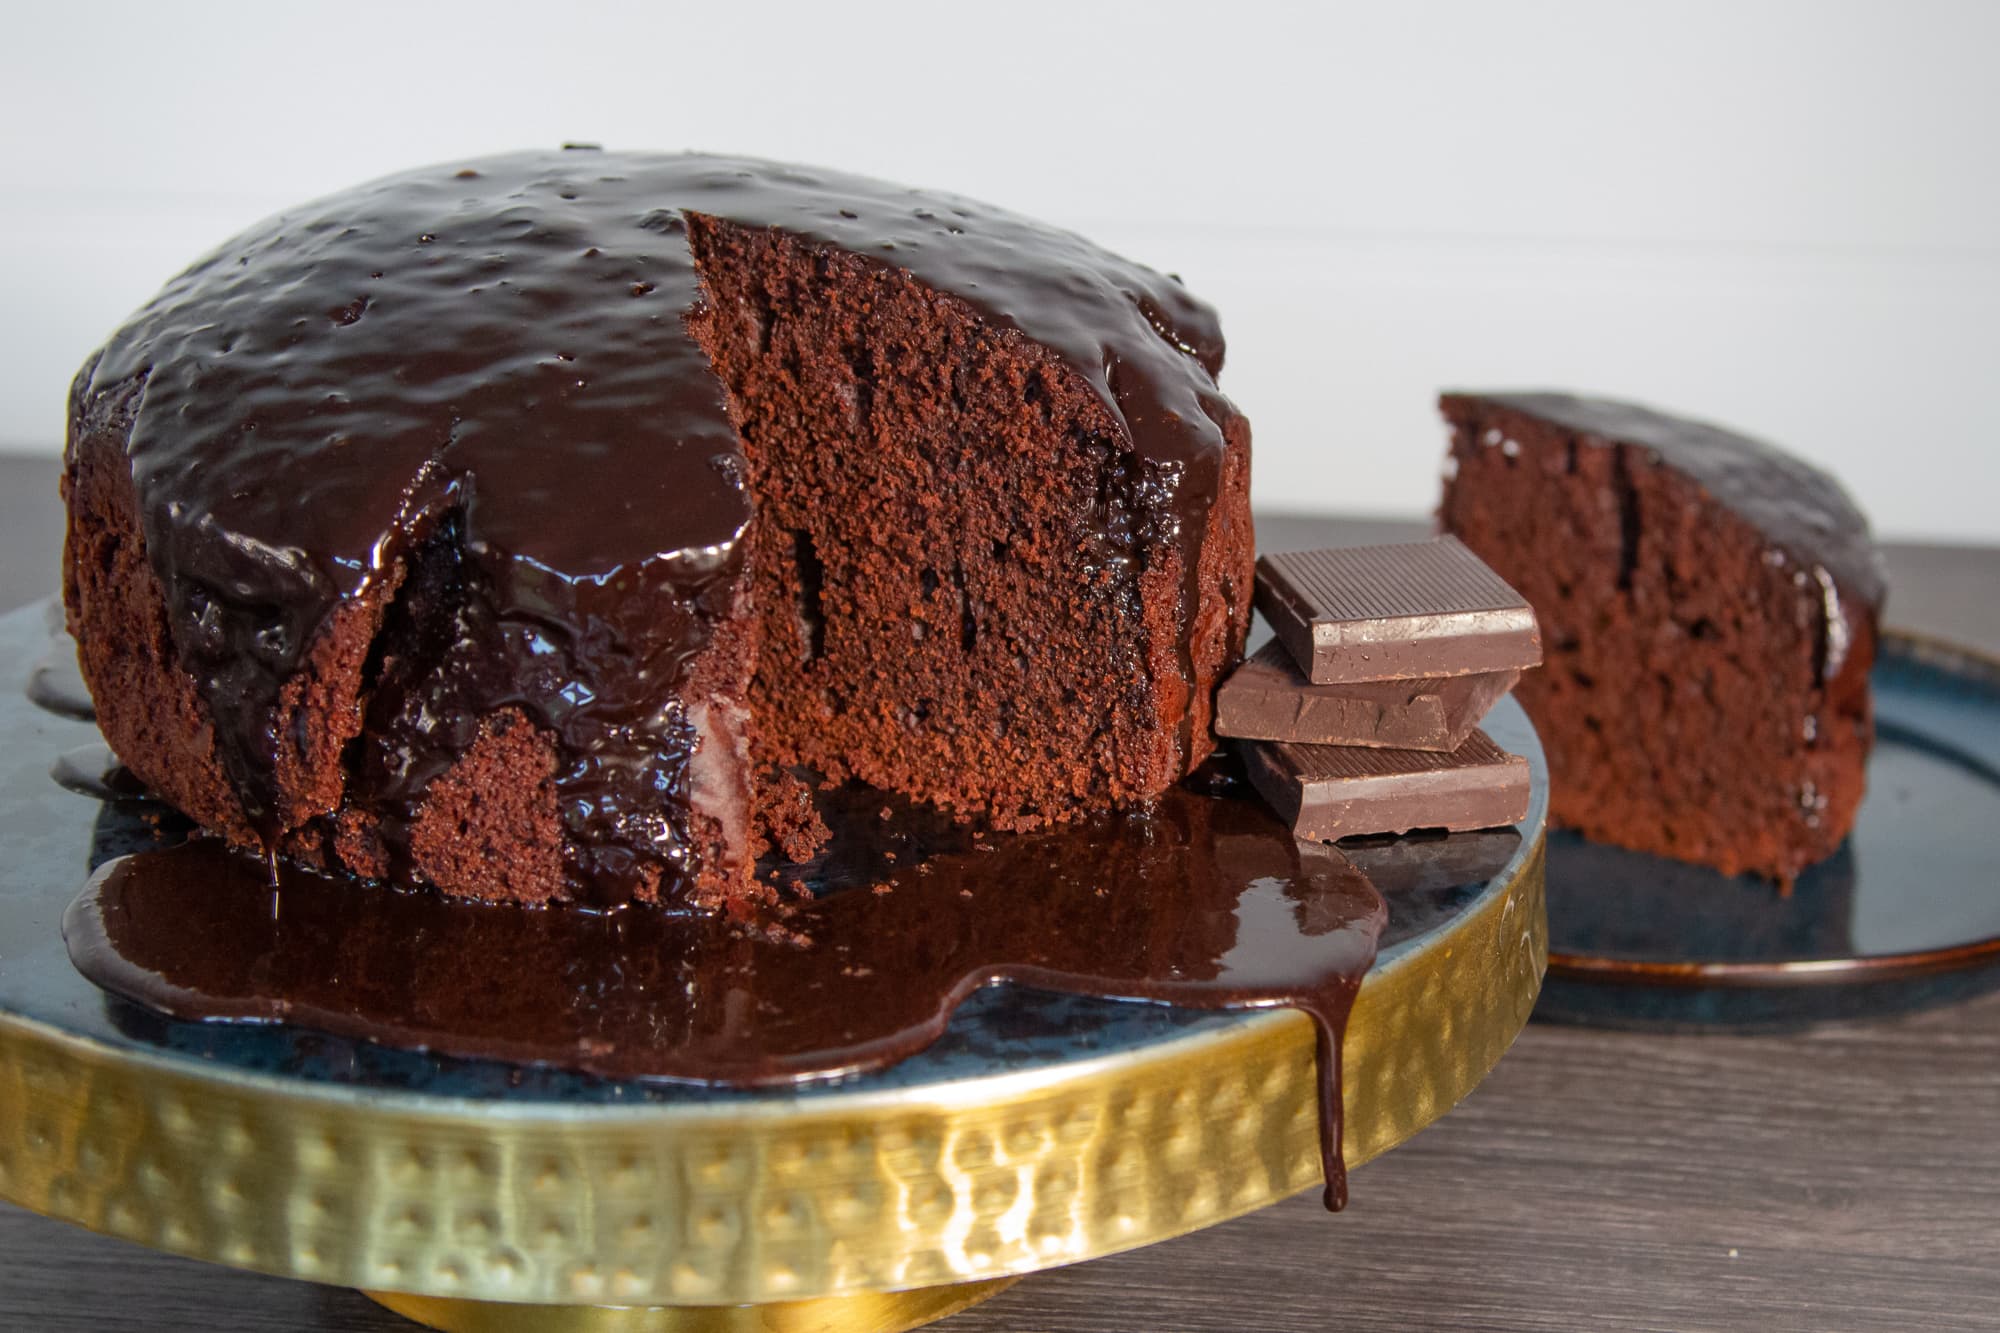 Classic Birthday Cake Recipe | King Arthur Baking